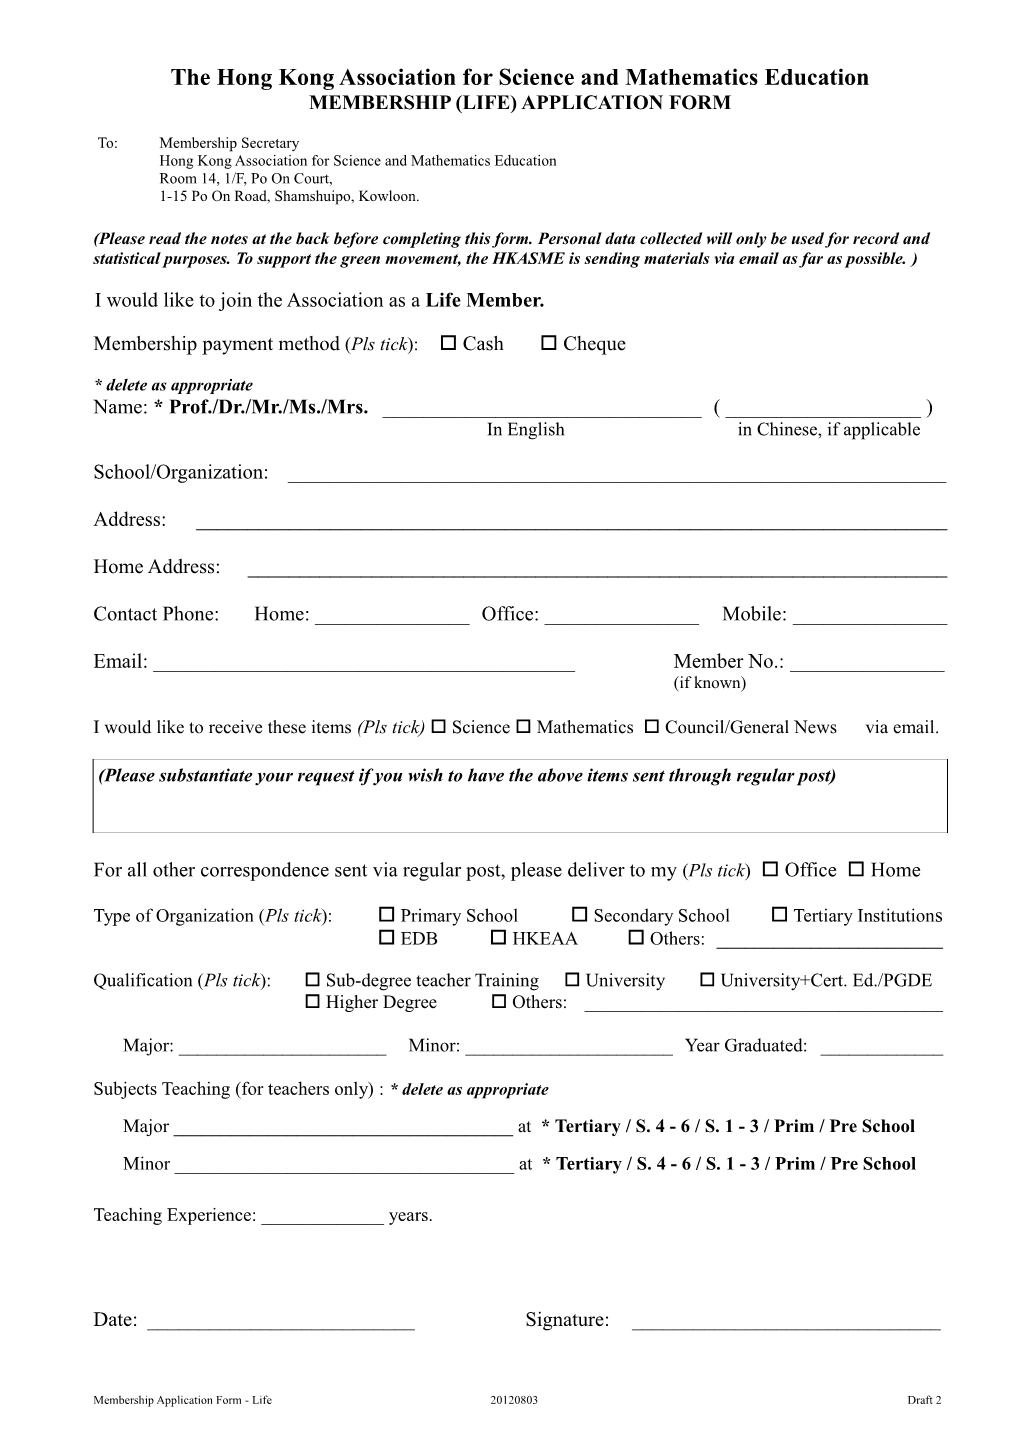 Membership (Life) Application Form 2012